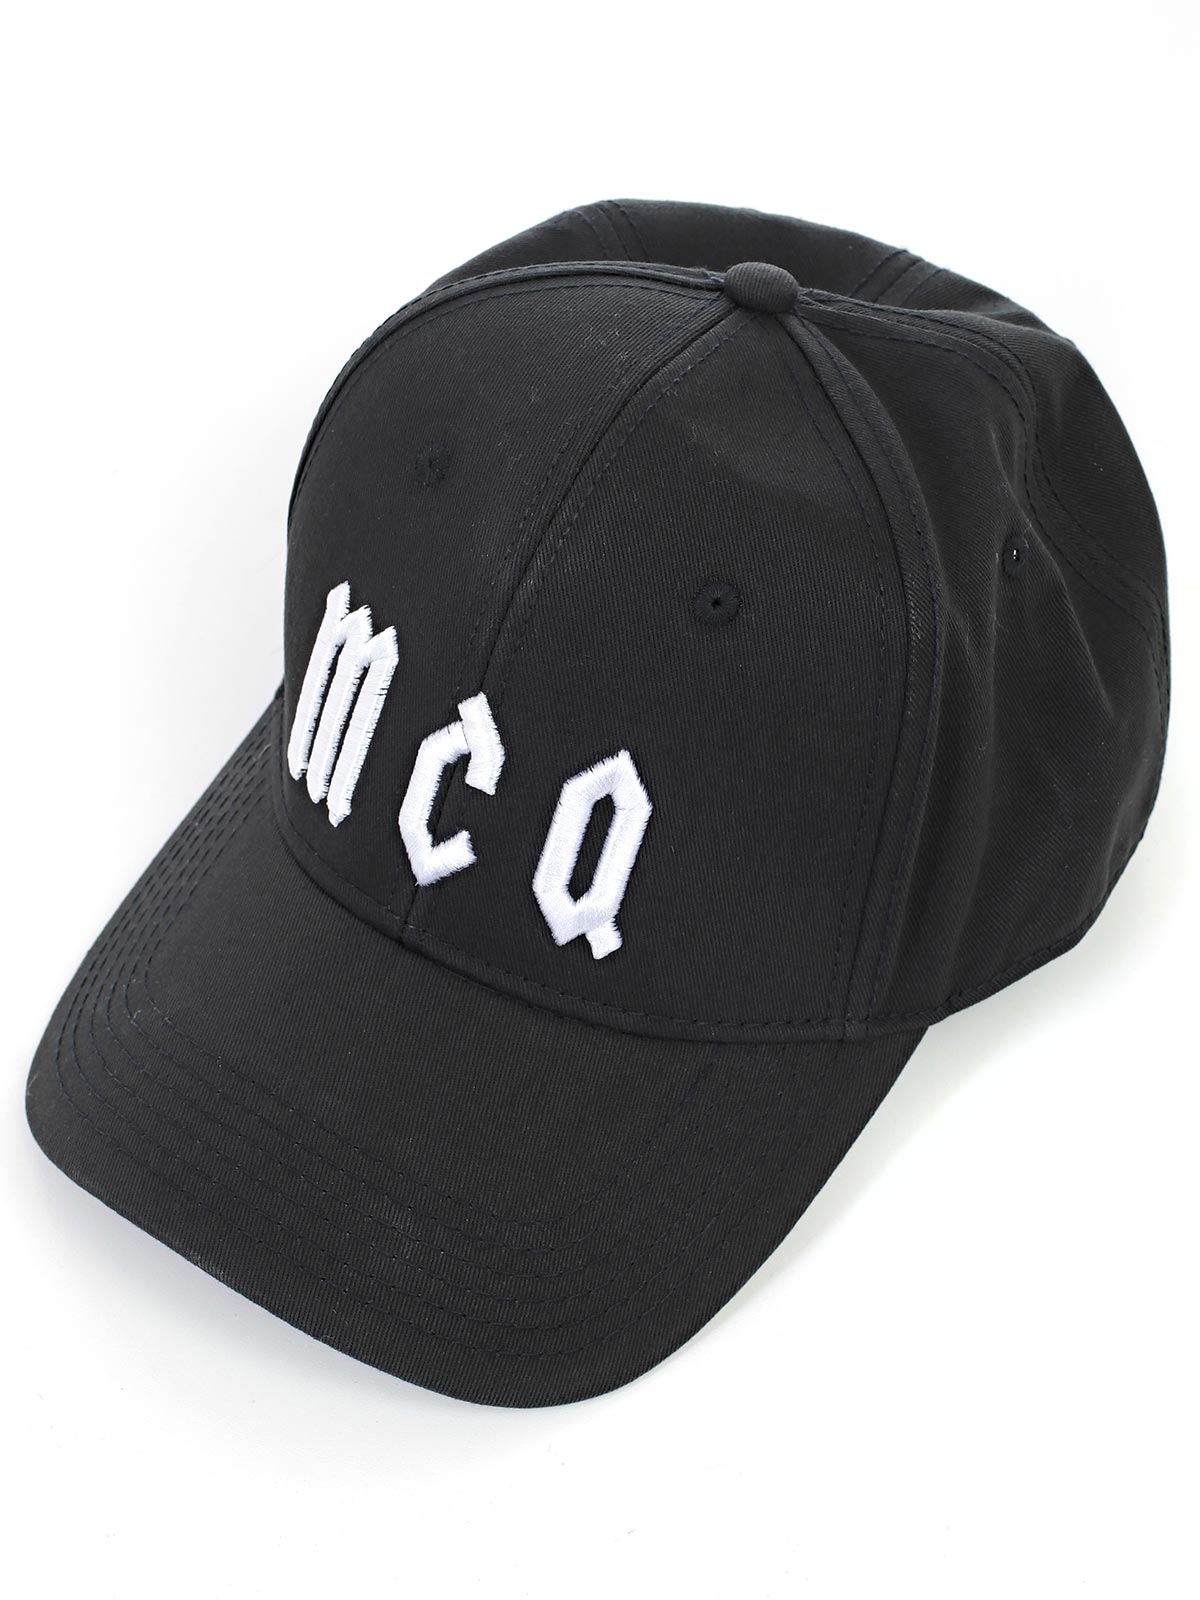 mcq hat